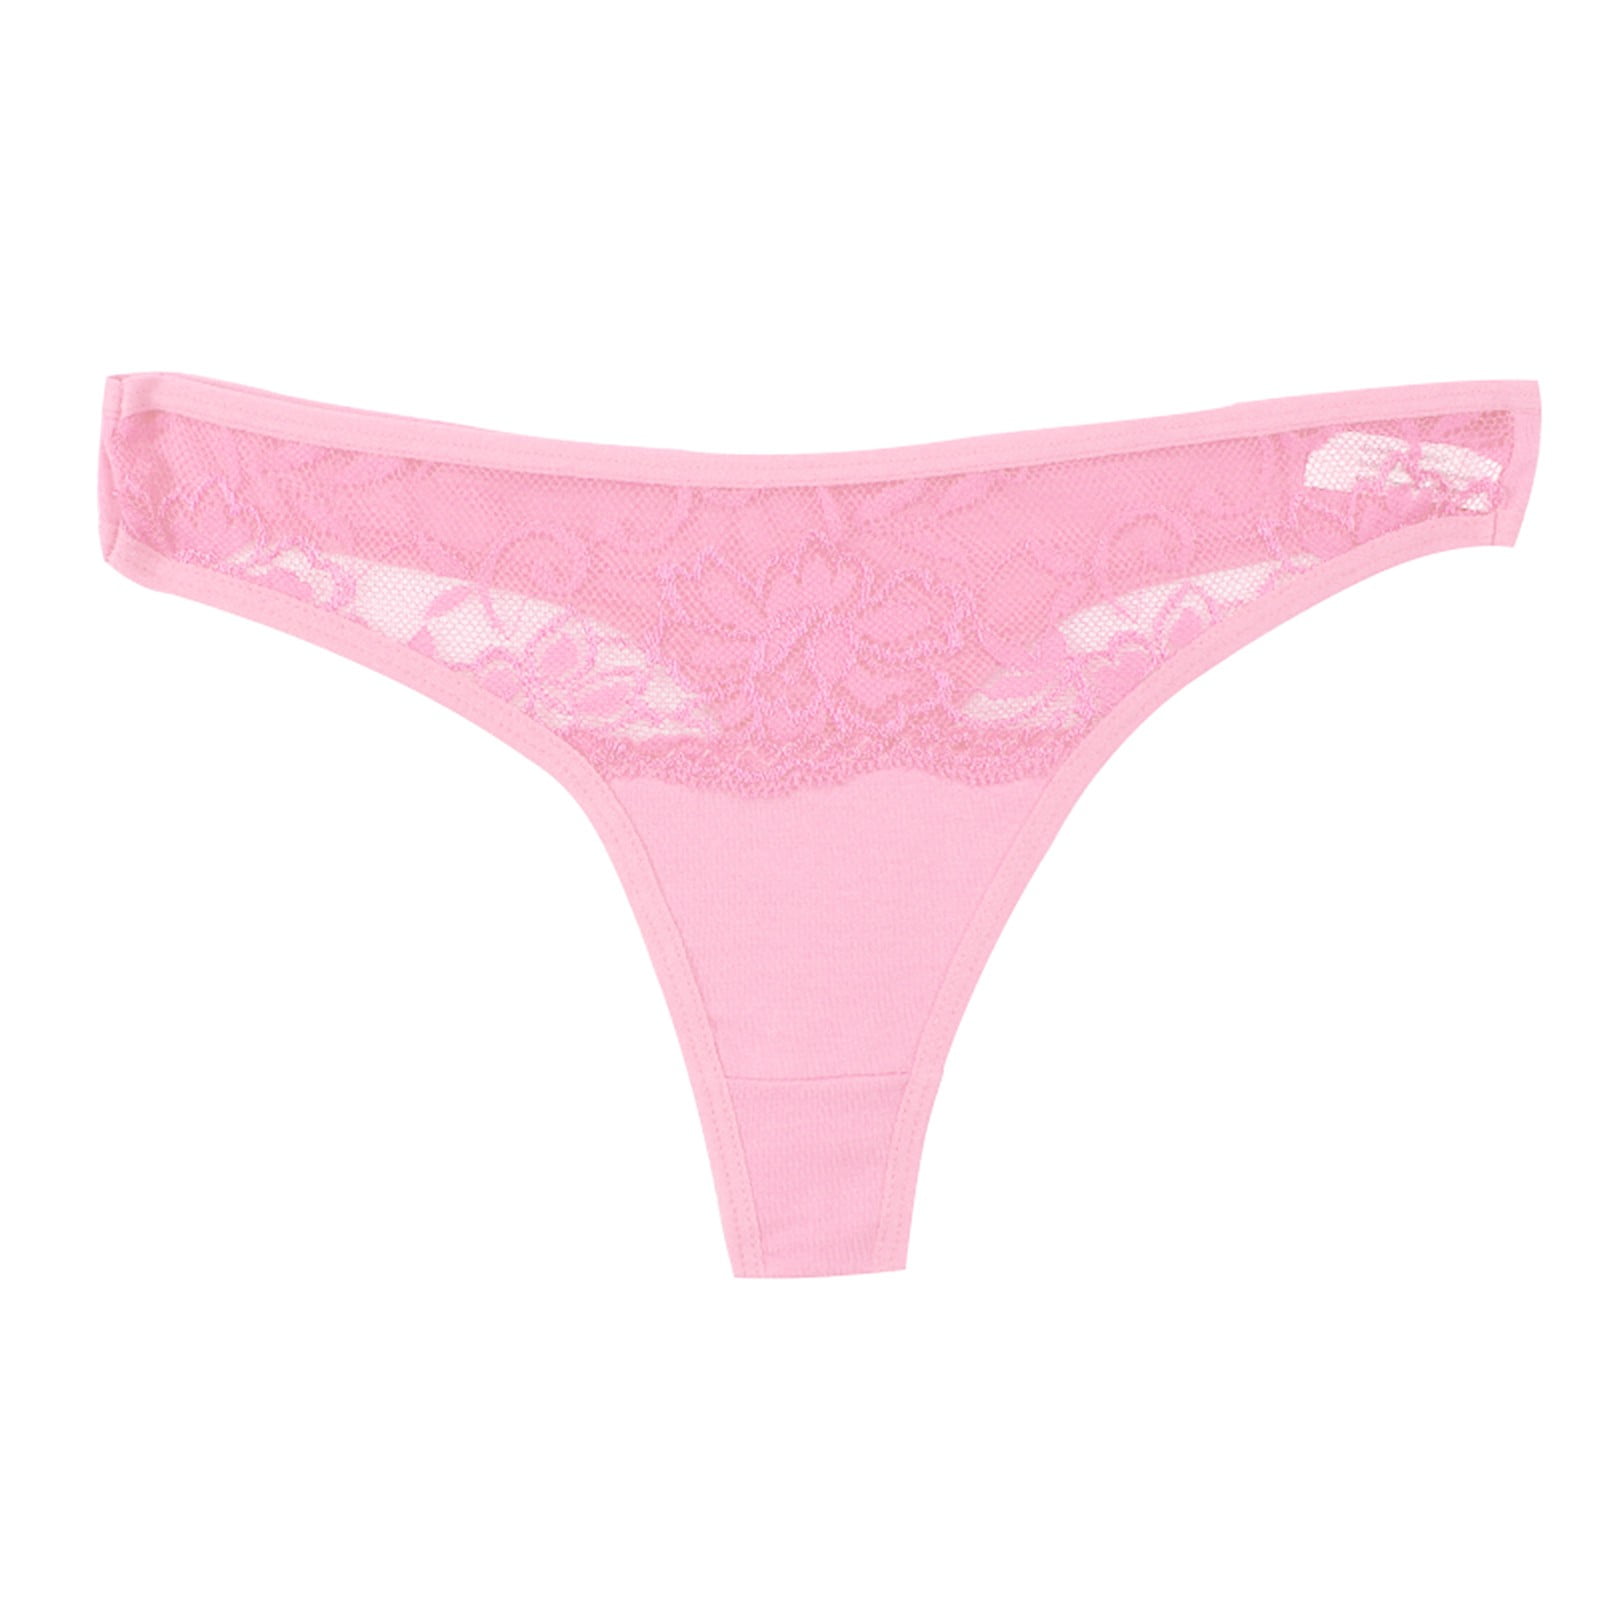 Seductive light pink lace thong